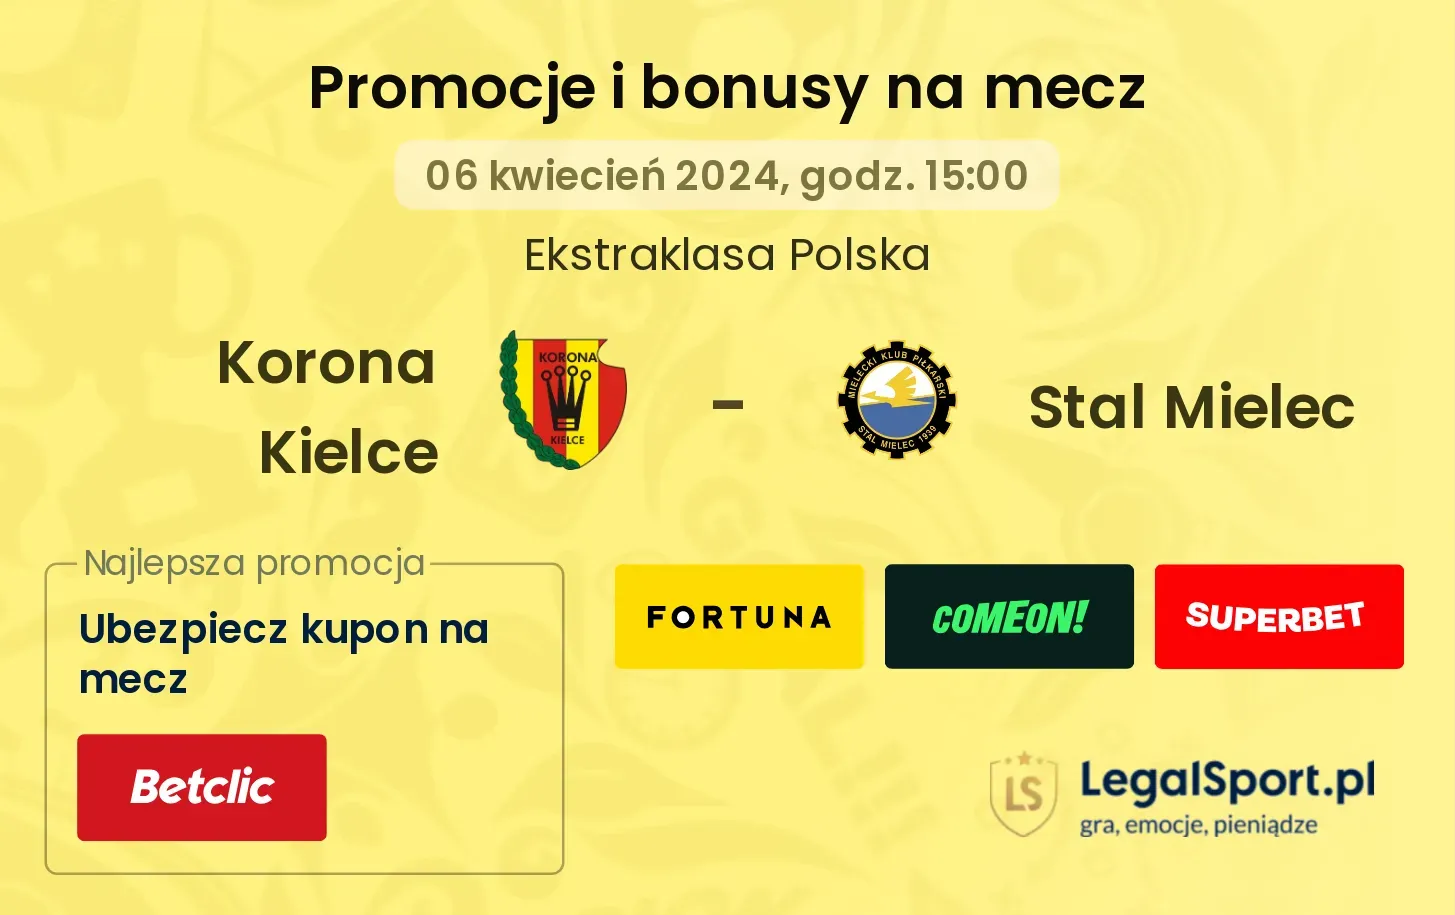 Korona Kielce - Stal Mielec promocje bonusy na mecz